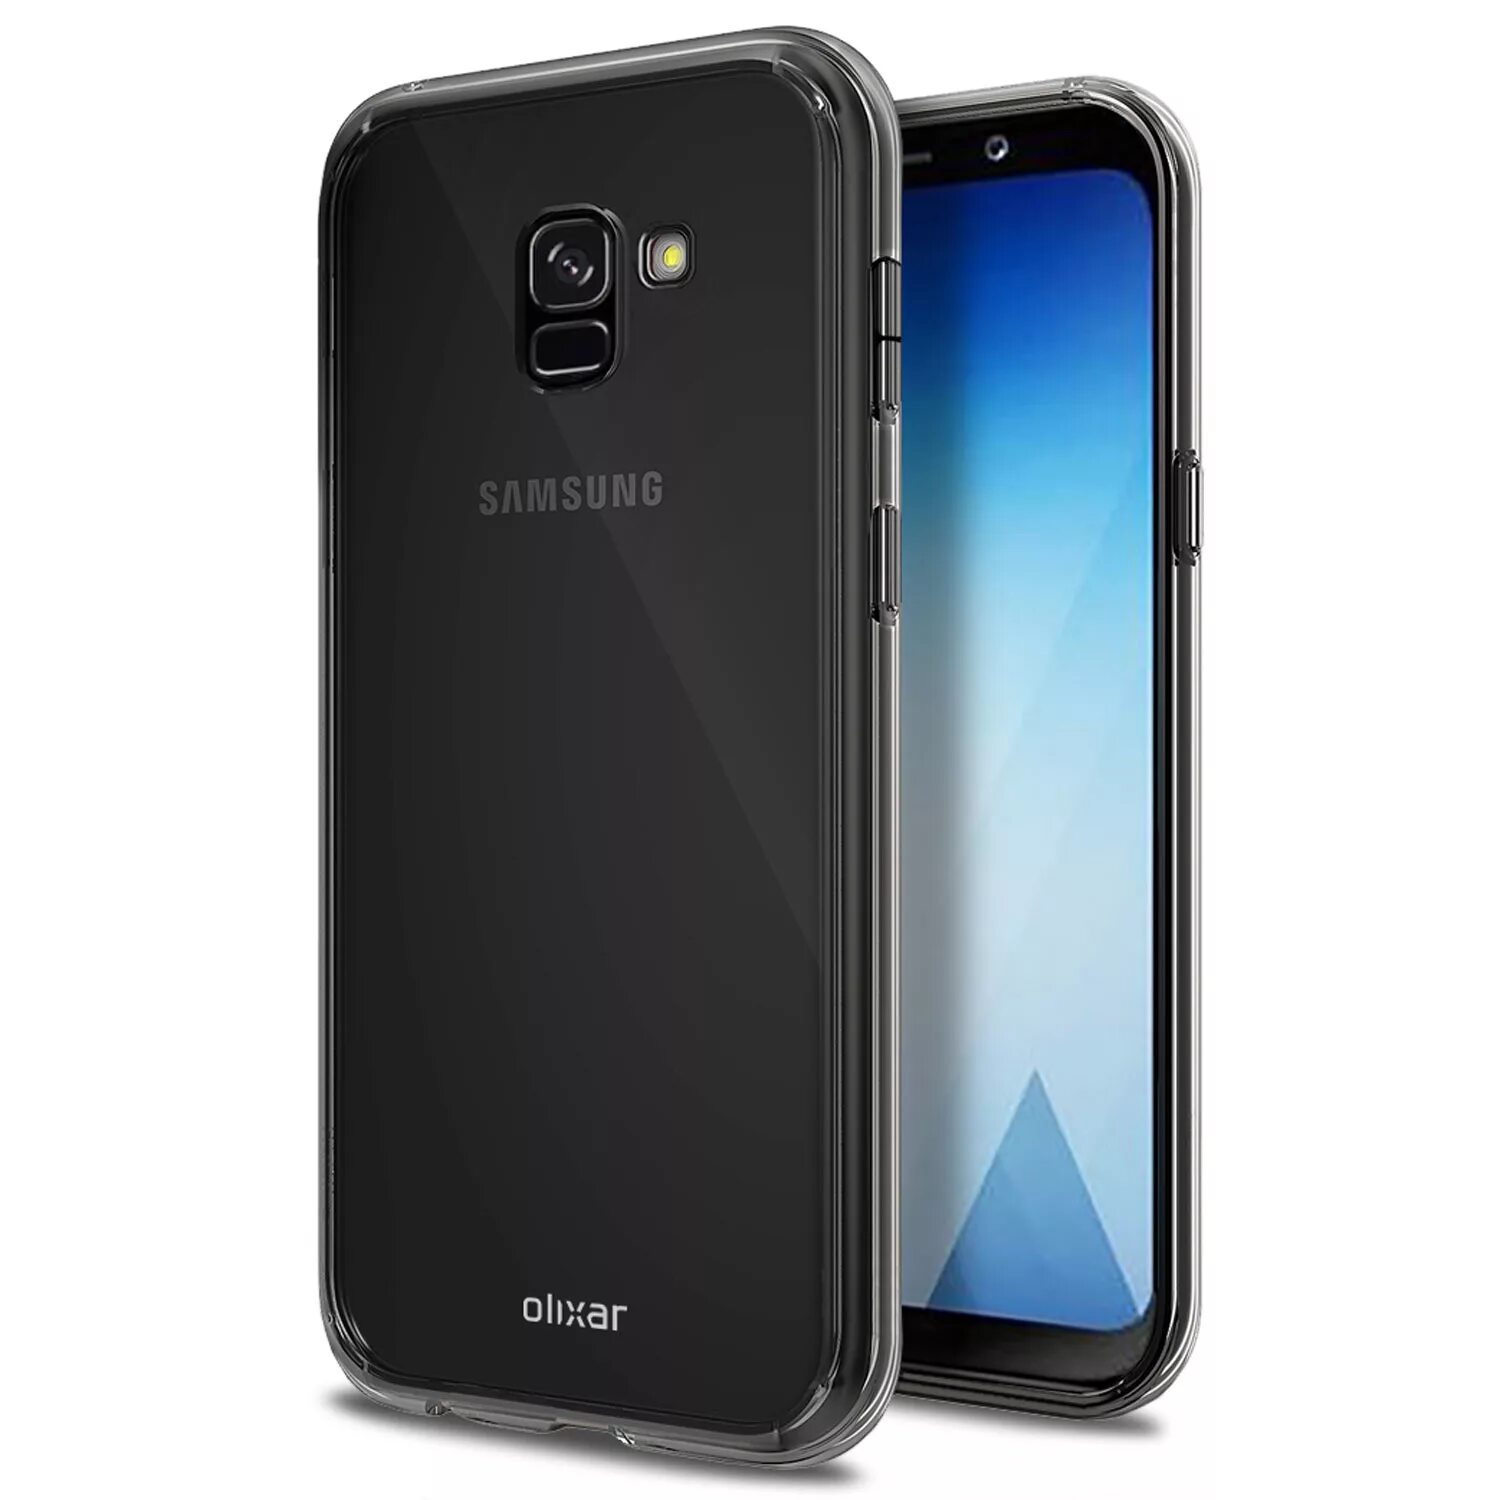 Samsung a5 2018. Самсунг а5 2018. Samsung Galaxy a3 2018. Galaxy a5 (2018) SM-a530f. Телефоны самсунг 2018 года